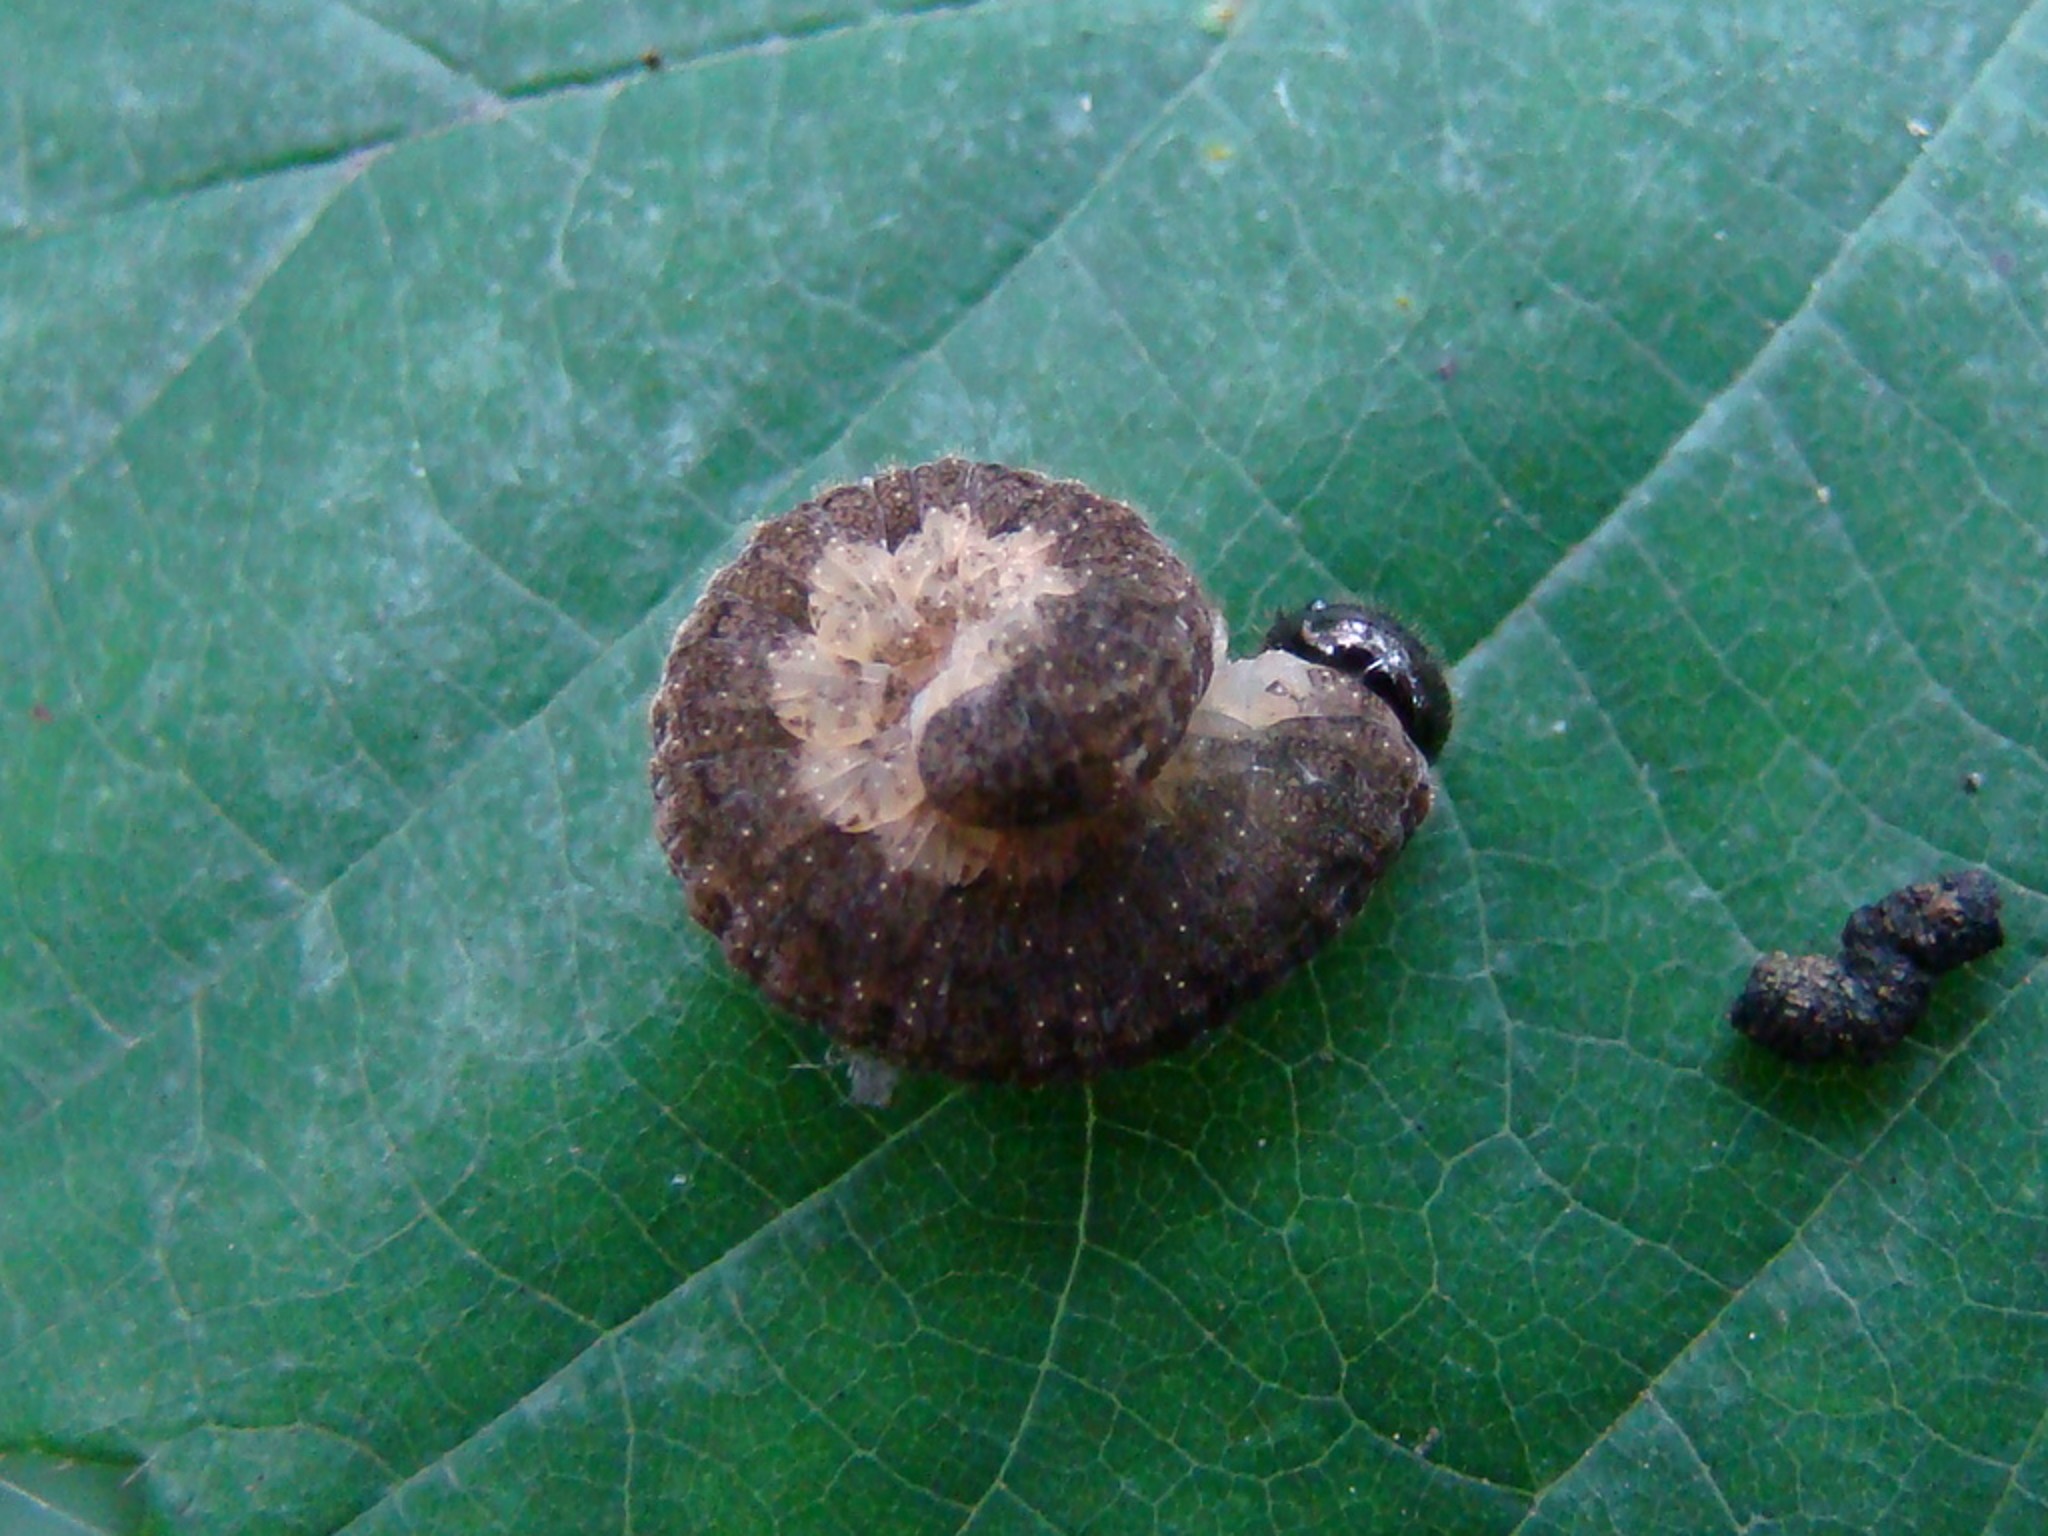 larves d’hyménoptères Seys Brigitte Phalempin 14102007